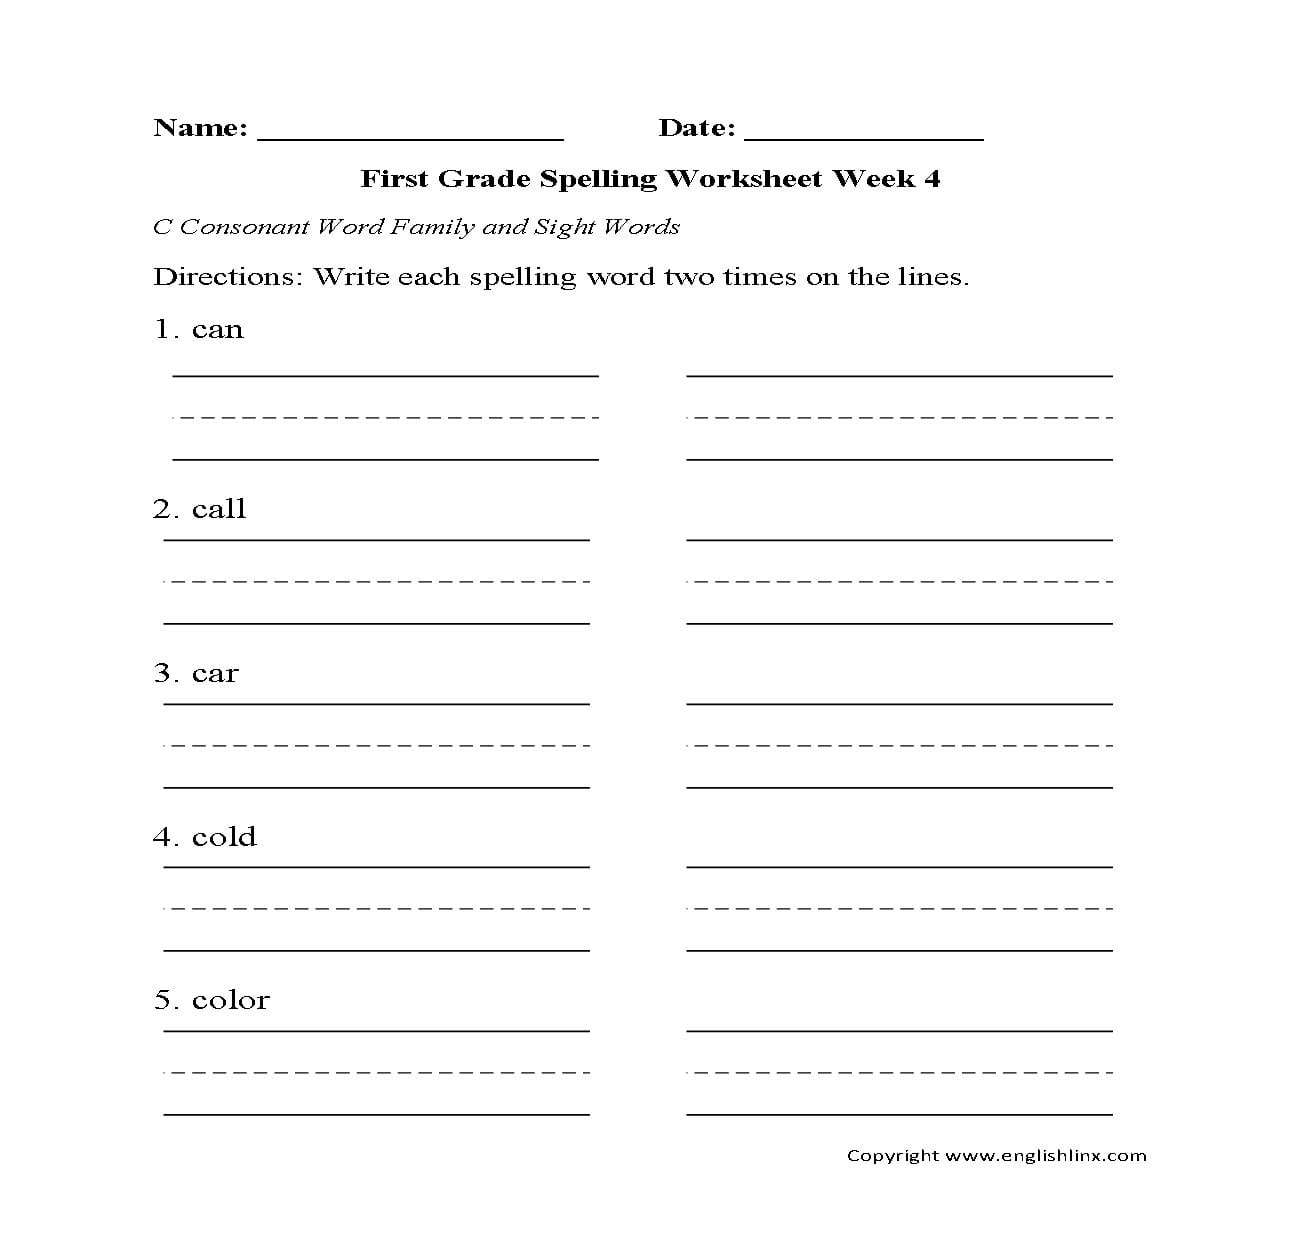 Spelling Worksheets  First Grade Spelling Worksheets For Spelling Color Words Worksheet